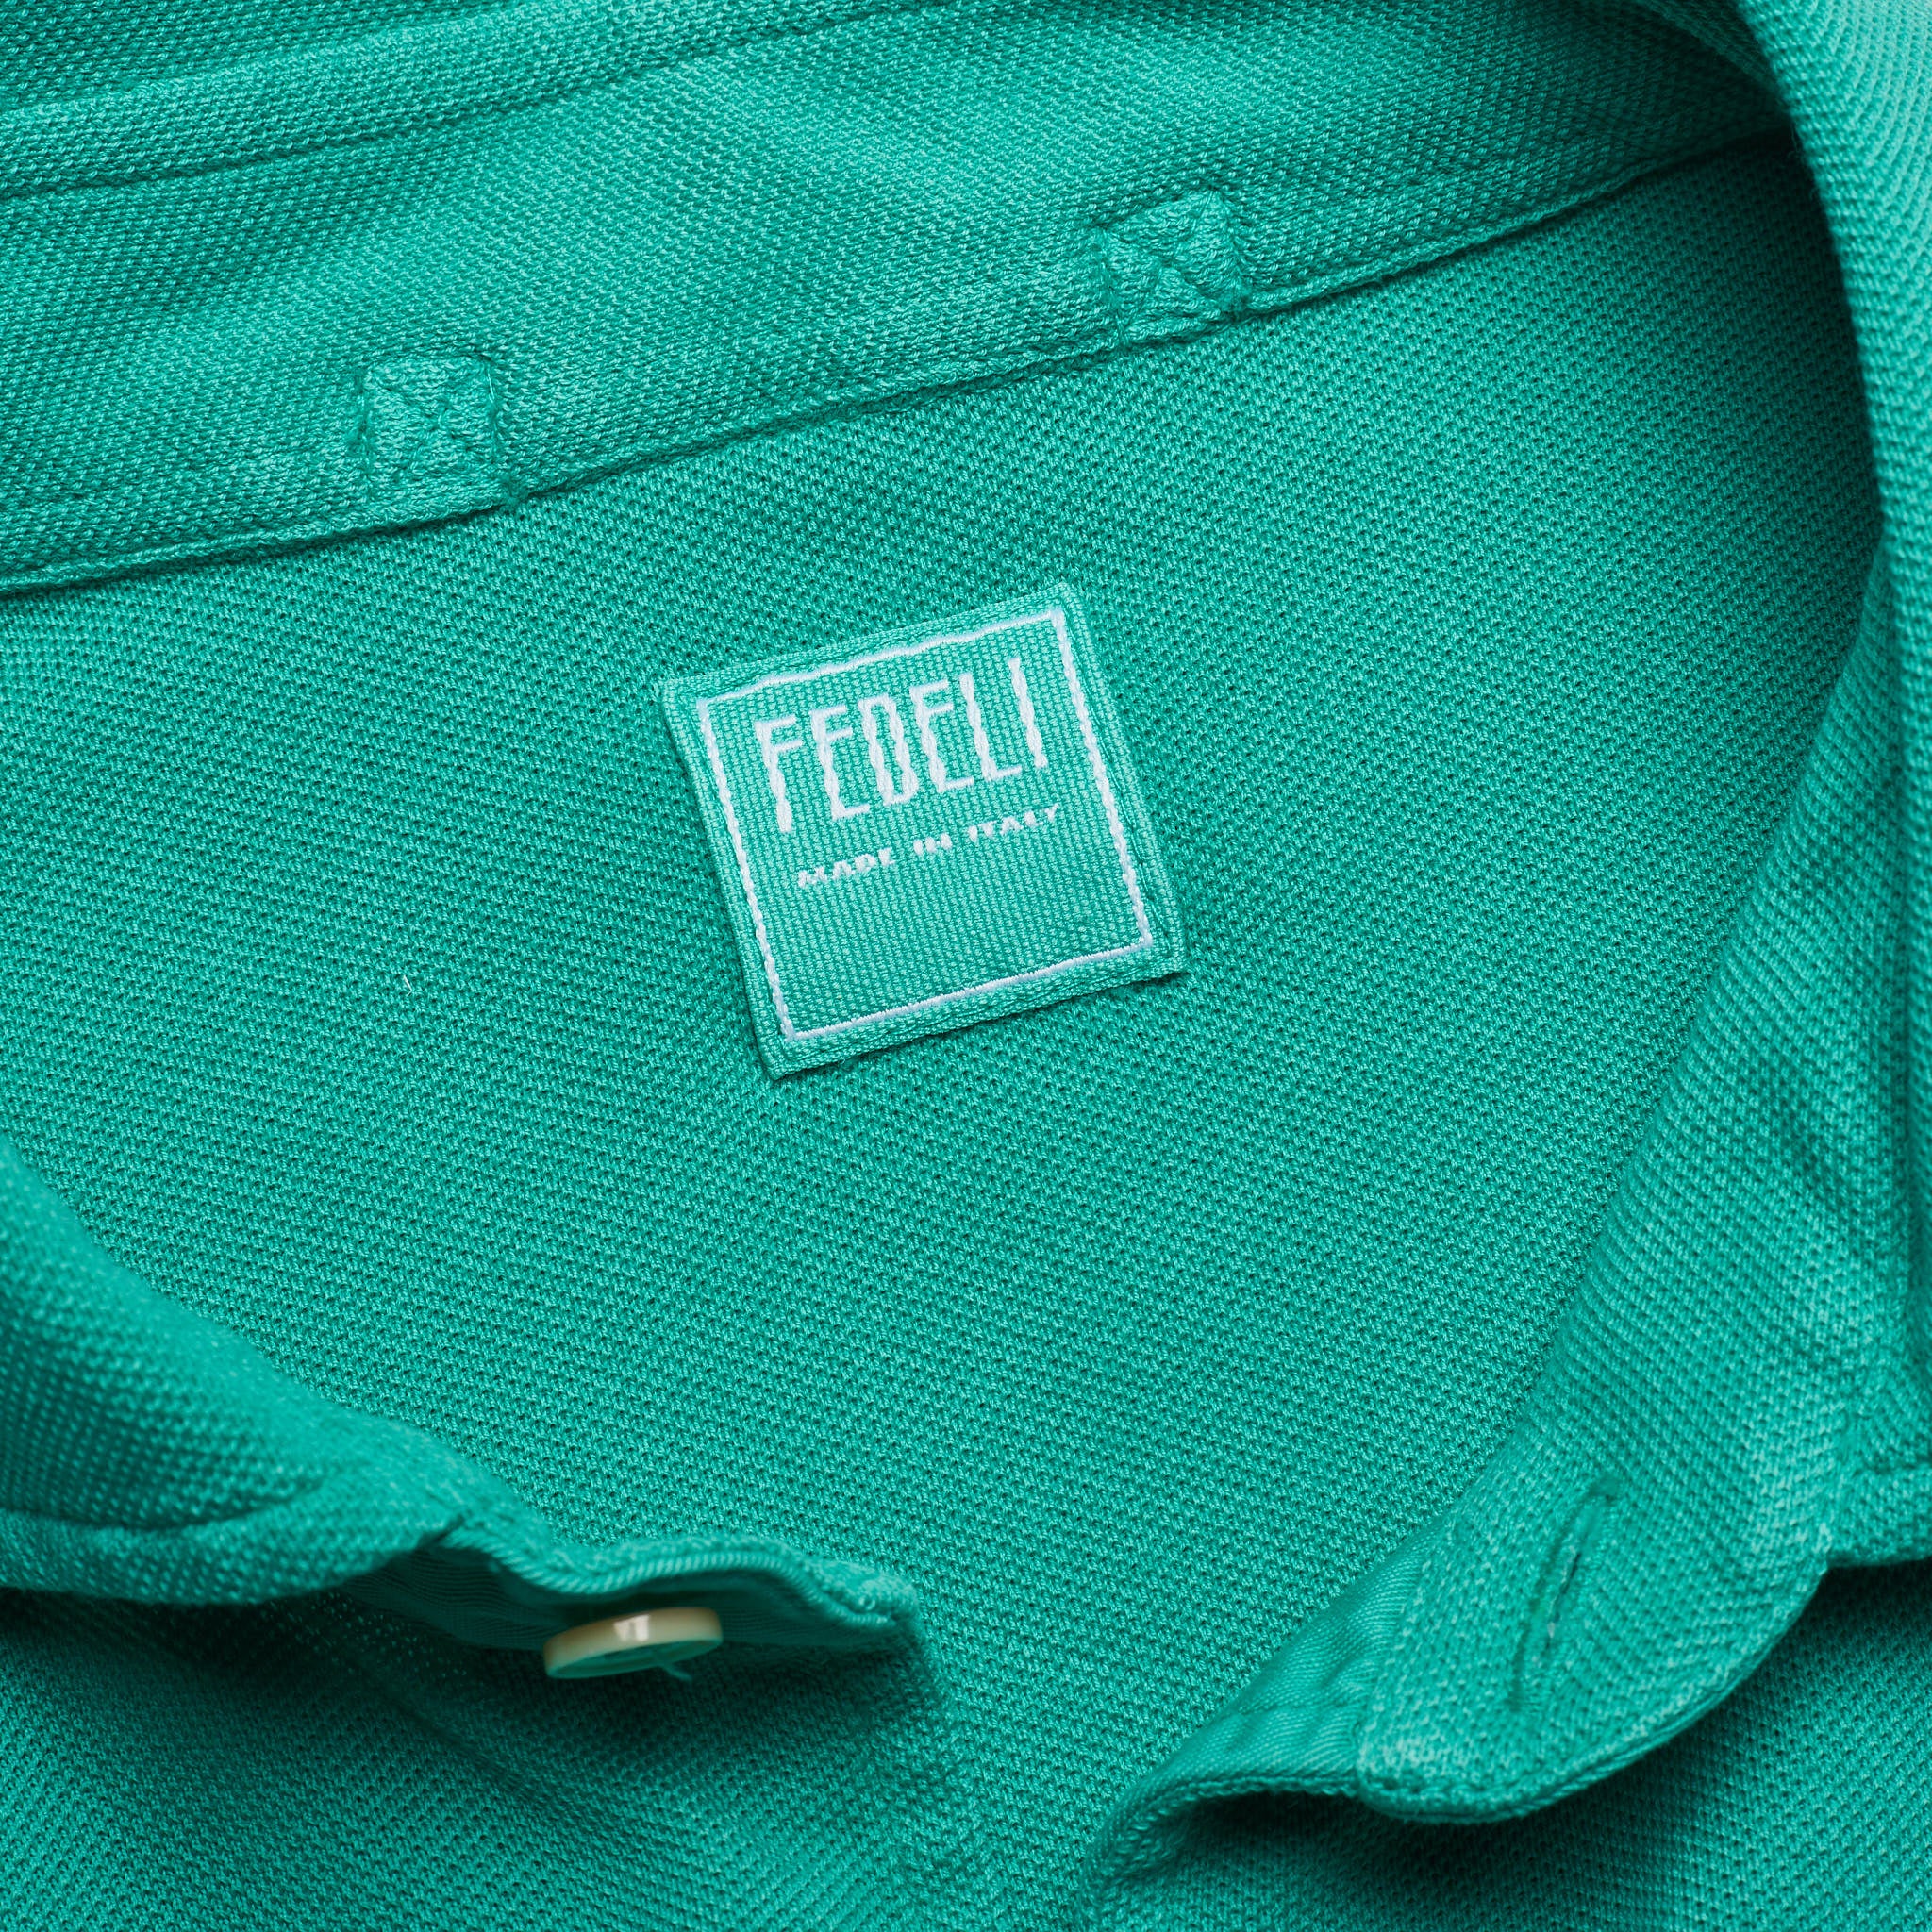 FEDELI Solid Emerald Green Cotton Pique Long Sleeve Polo Shirt NEW